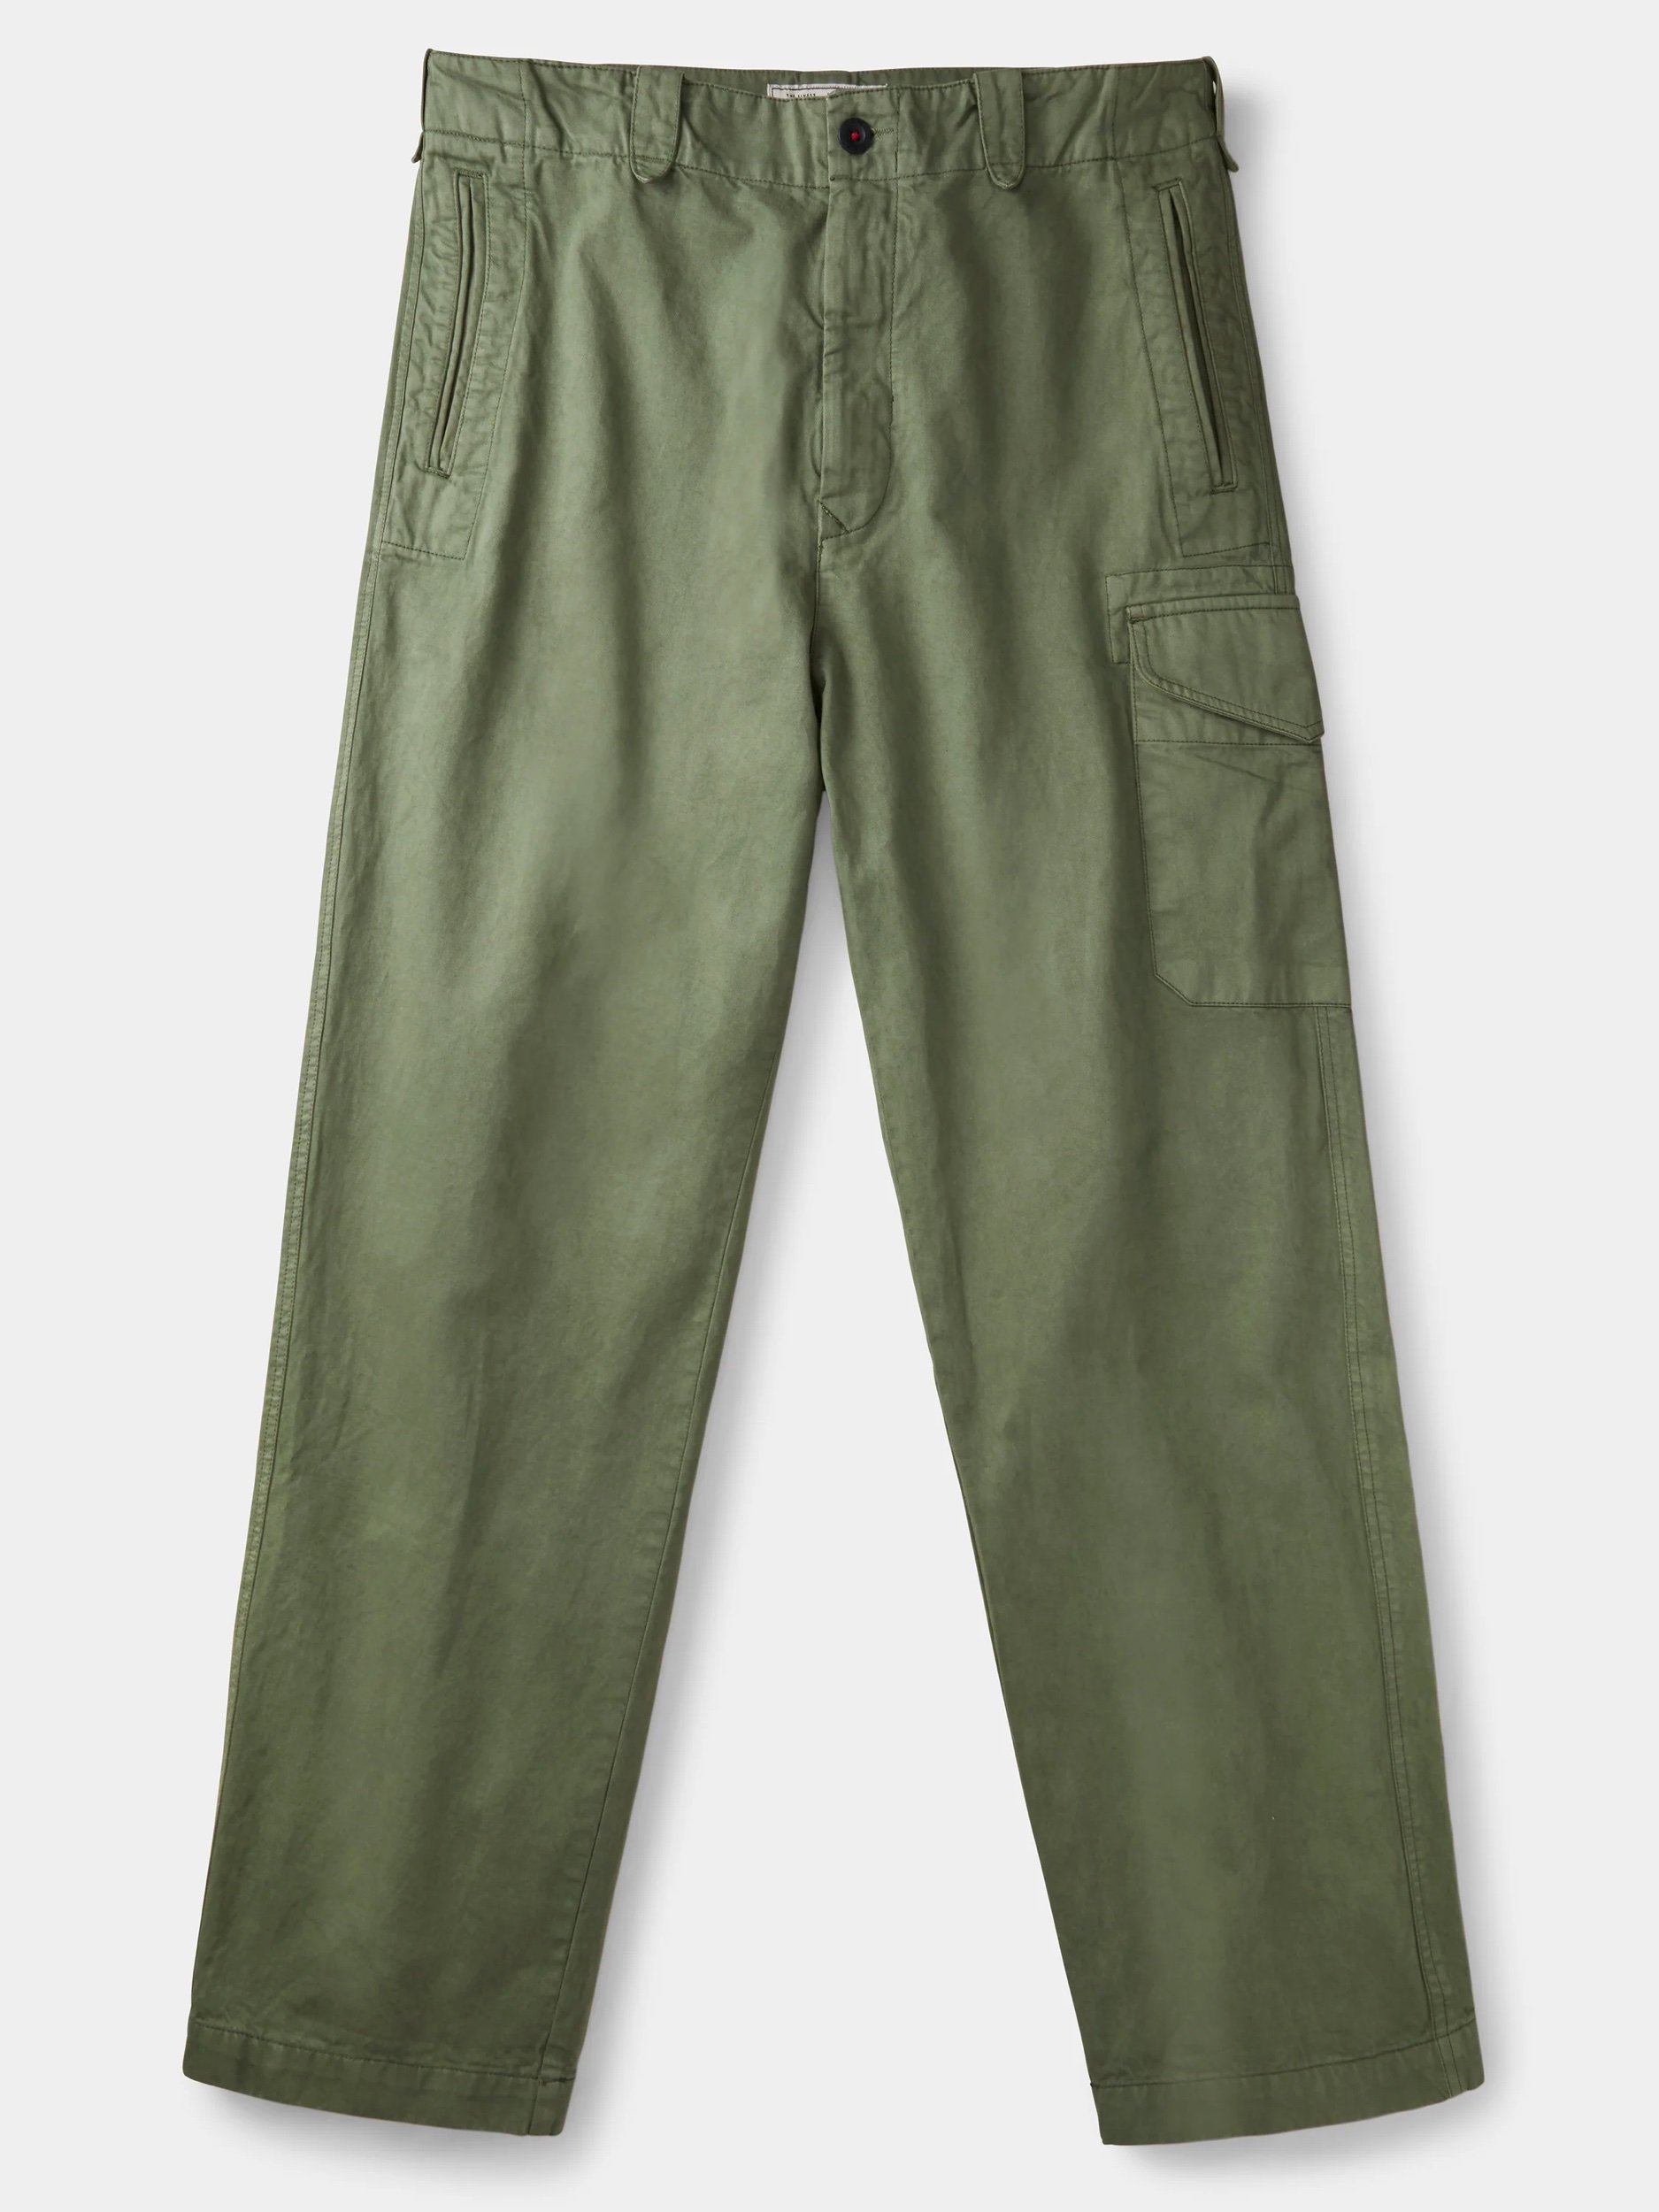  Aubin military trouser 